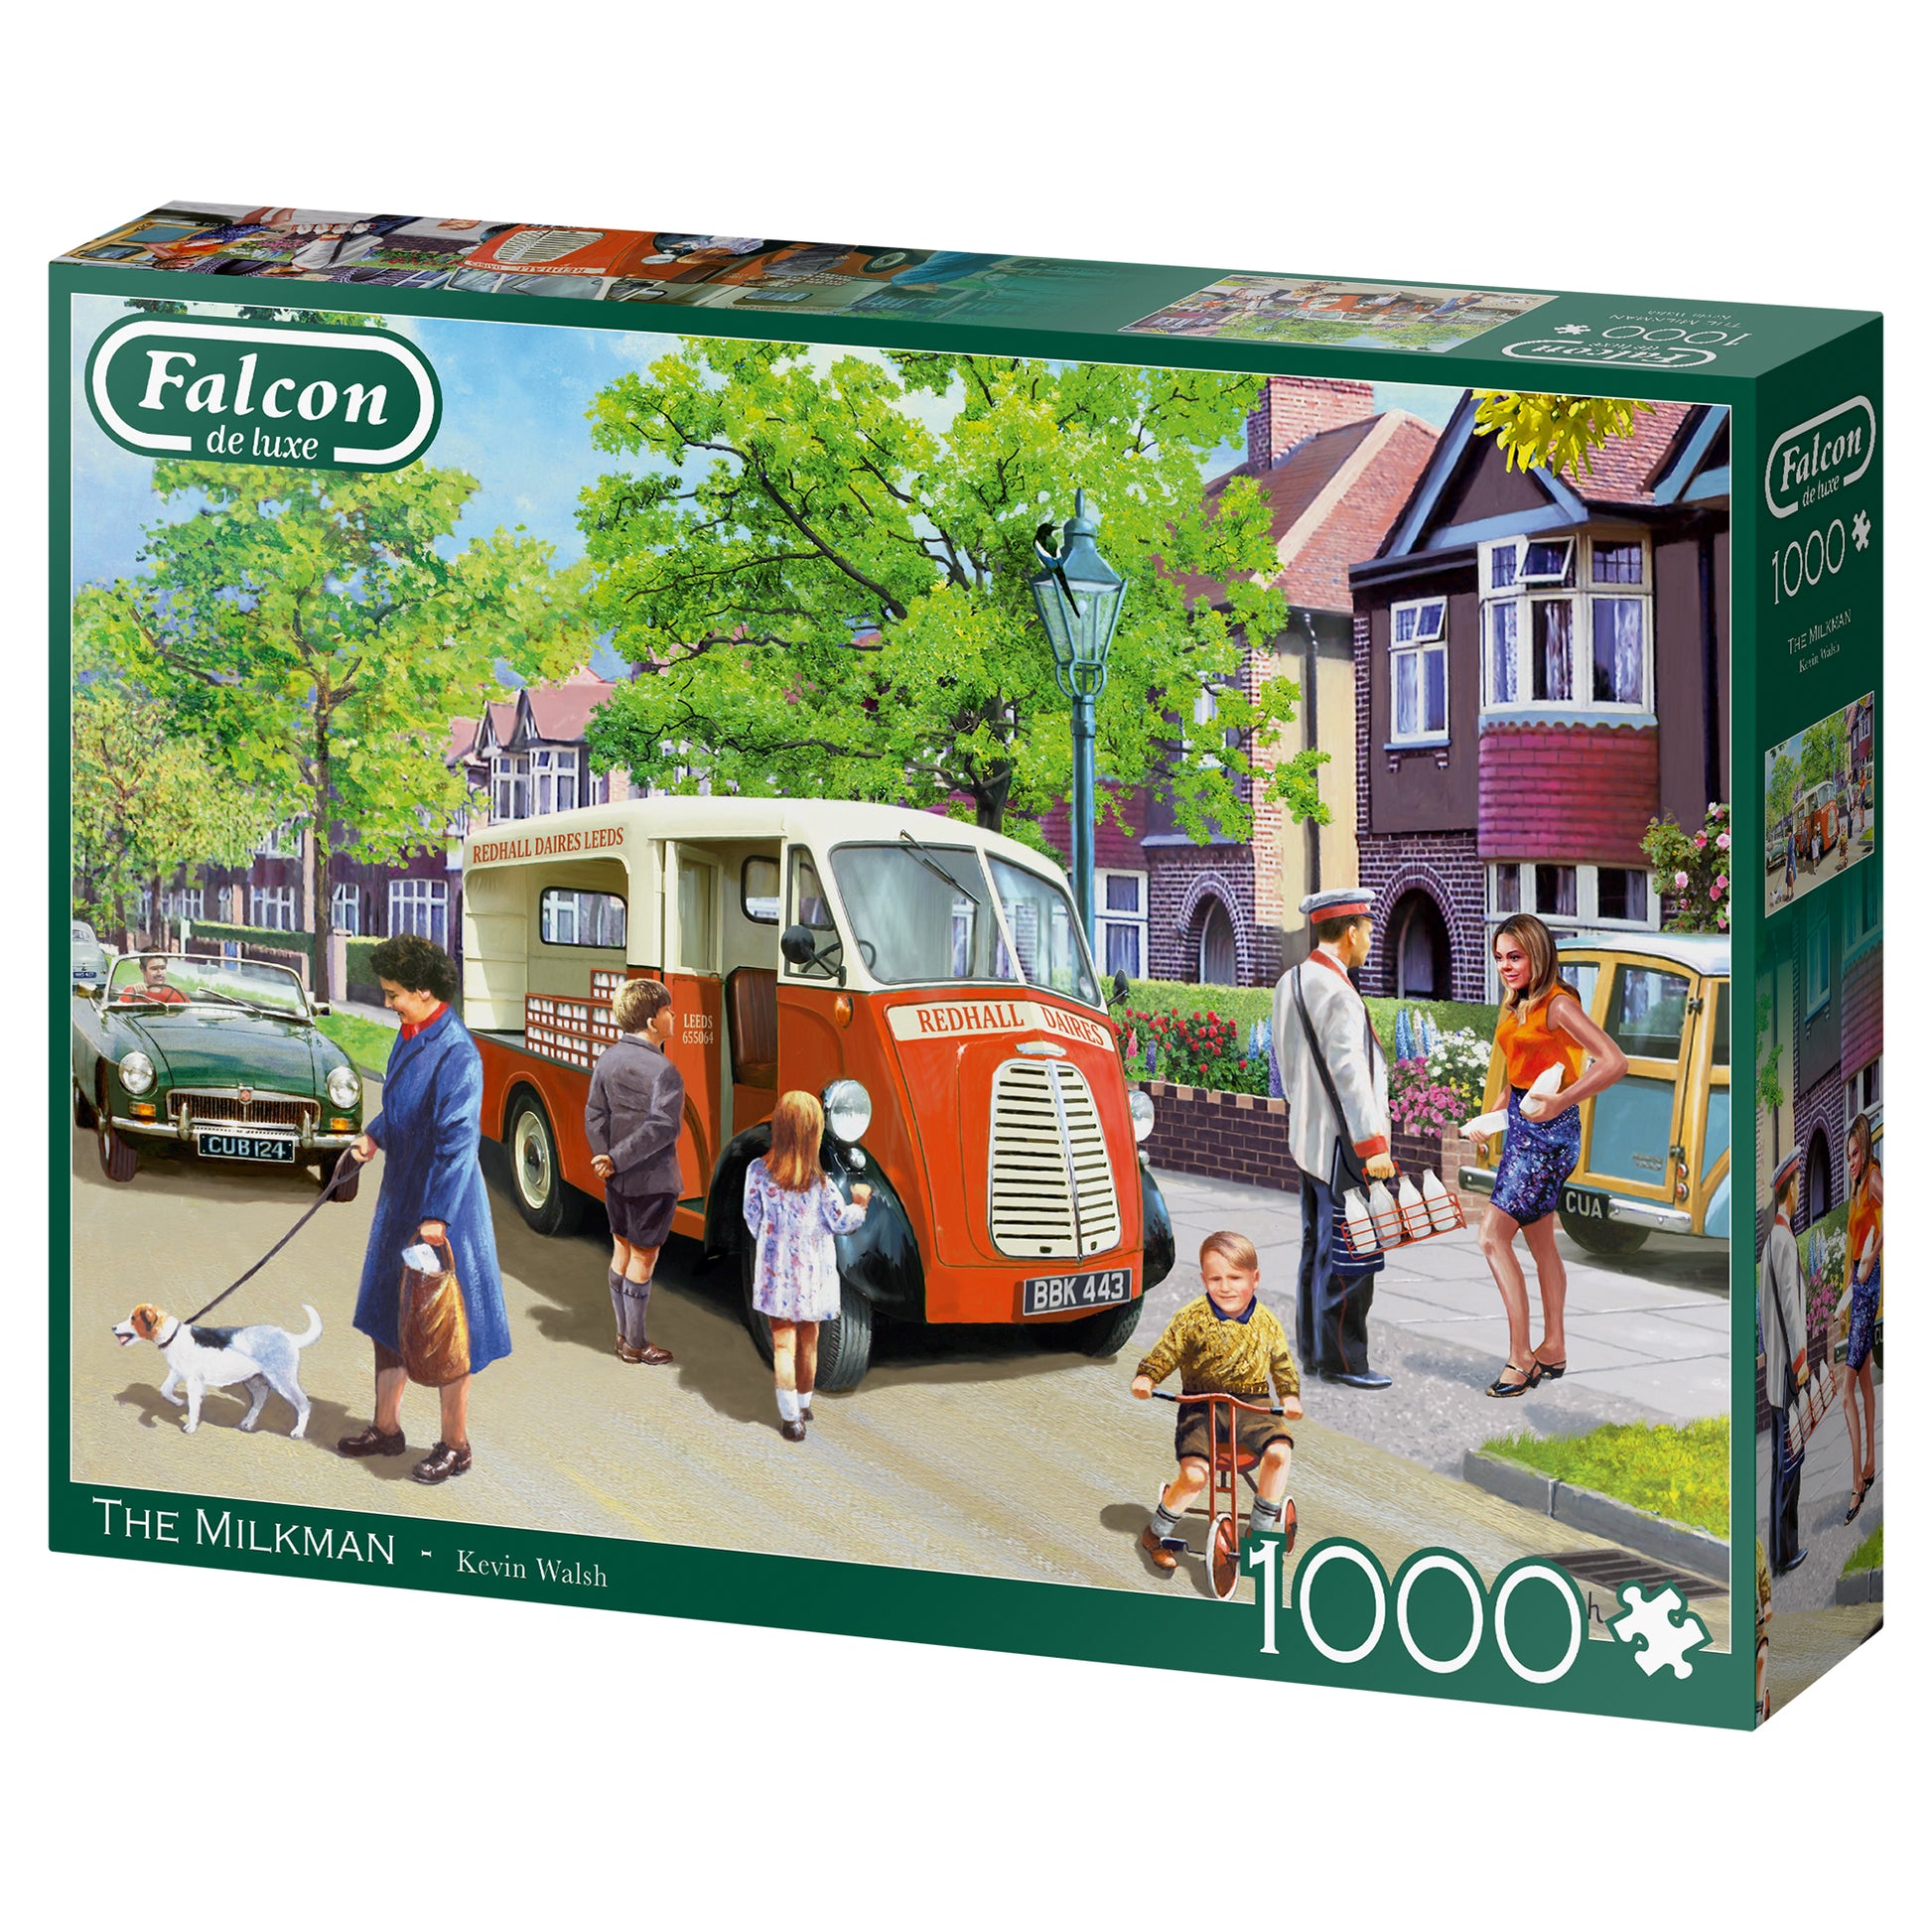 Falcon - The Milkman (1000 pieces) - product image - Jumboplay.com